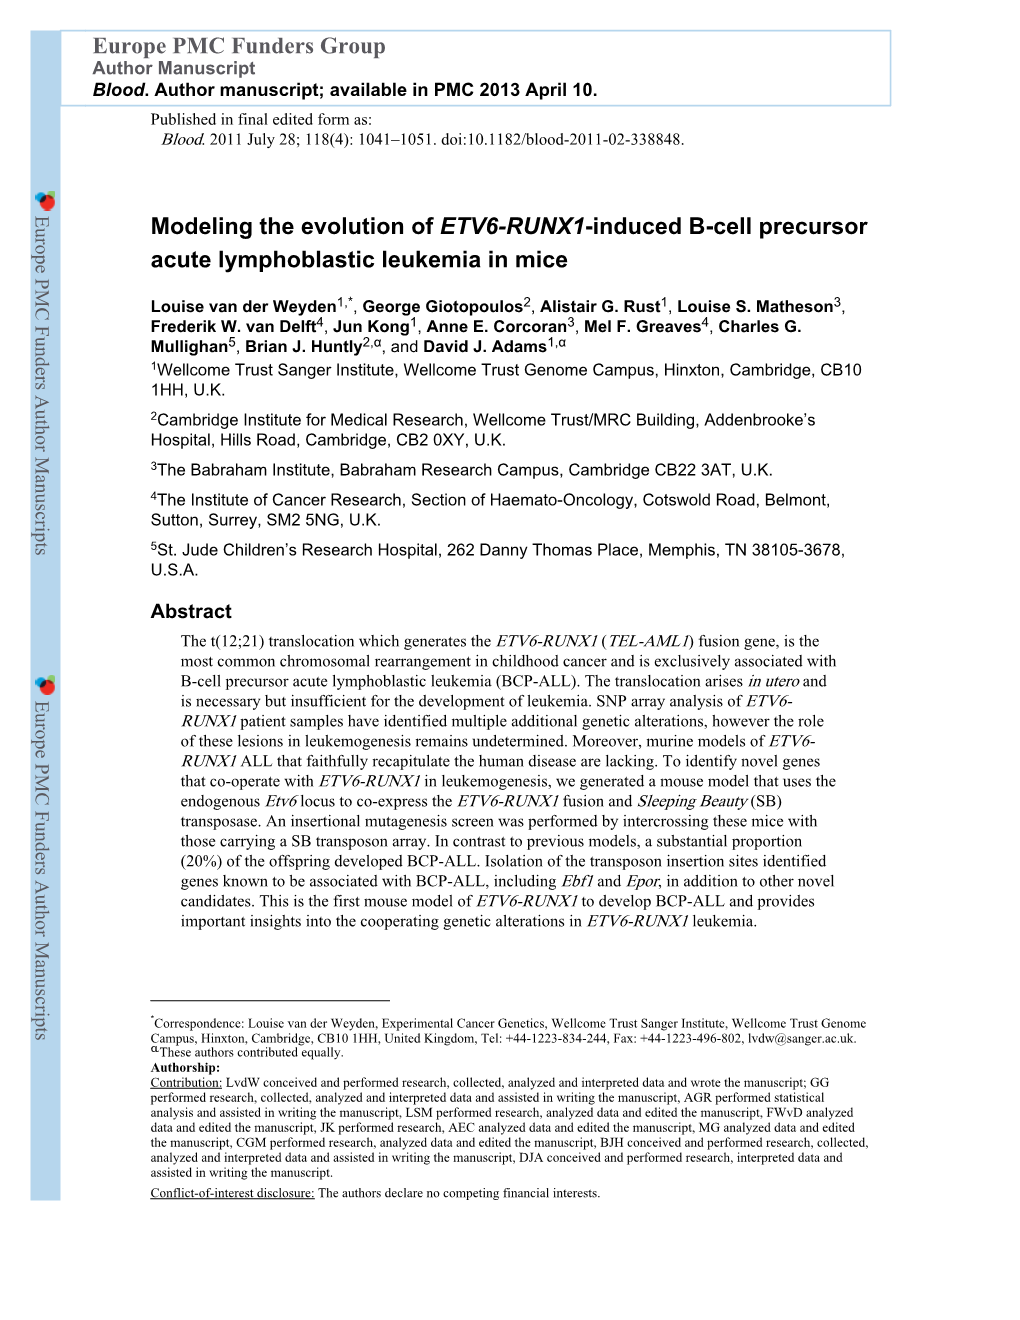 Modeling the Evolution of ETV6-RUNX1-Induced B-Cell Precursor Acute Lymphoblastic Leukemia in Mice